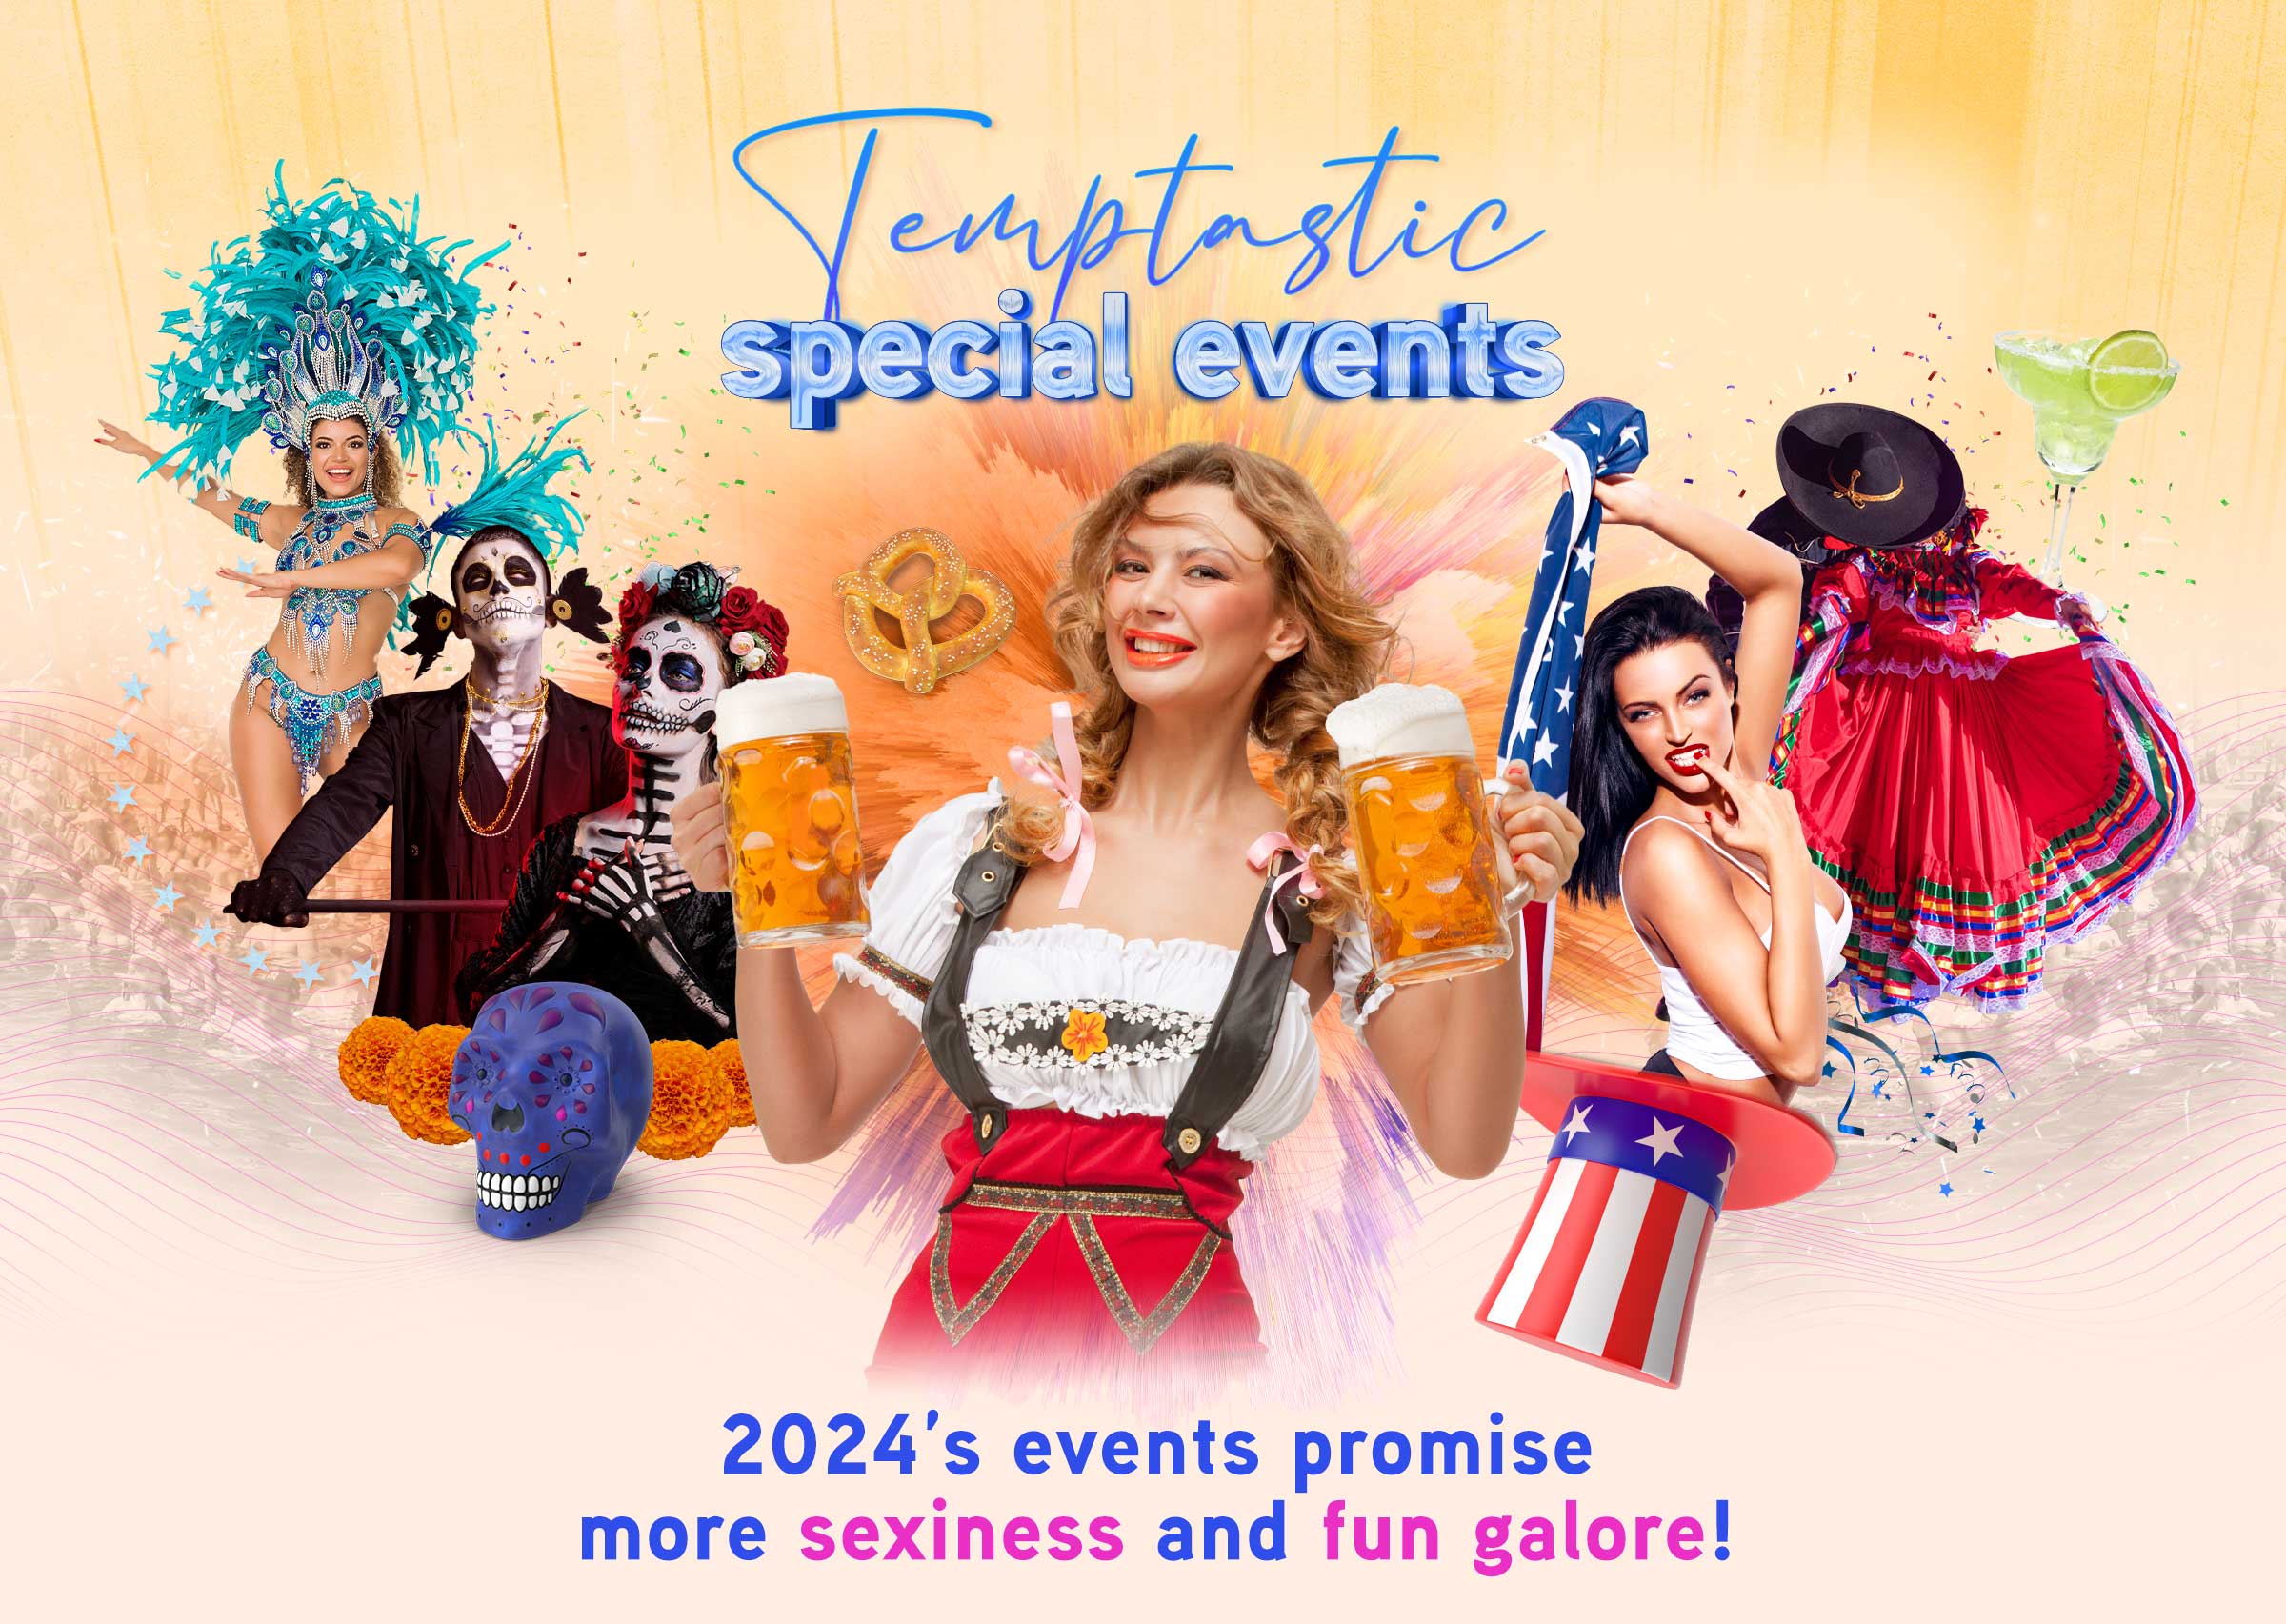 TEMPTASTIC SPECIAL EVENTS, 2024's events promise more fun galore! 